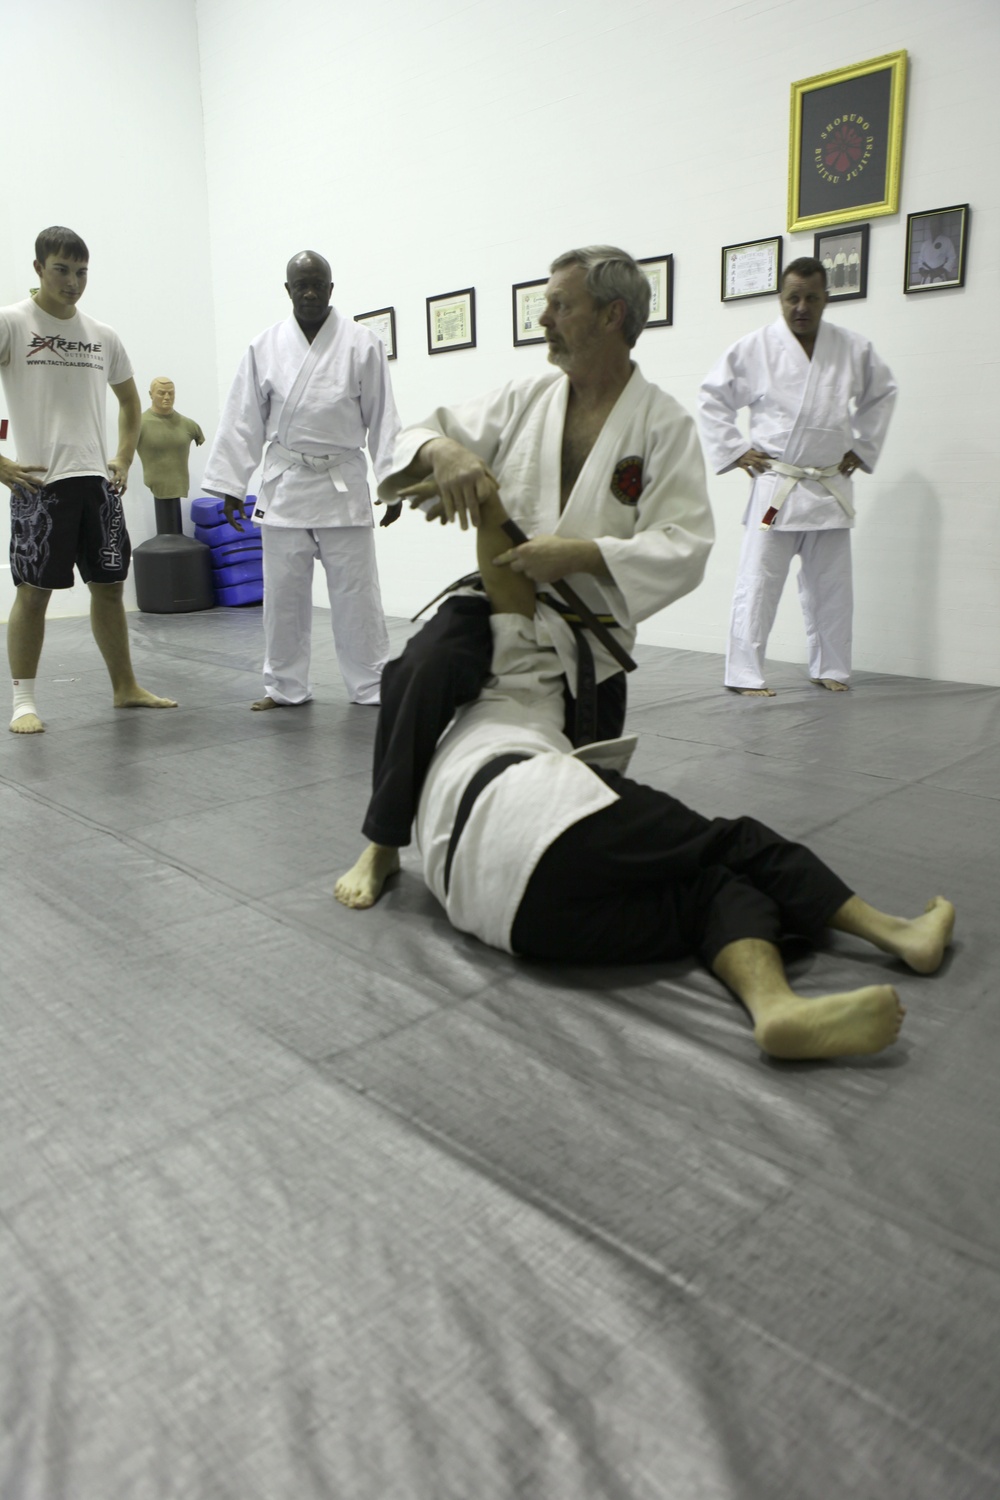 Course teaches painful art of Jujitsu